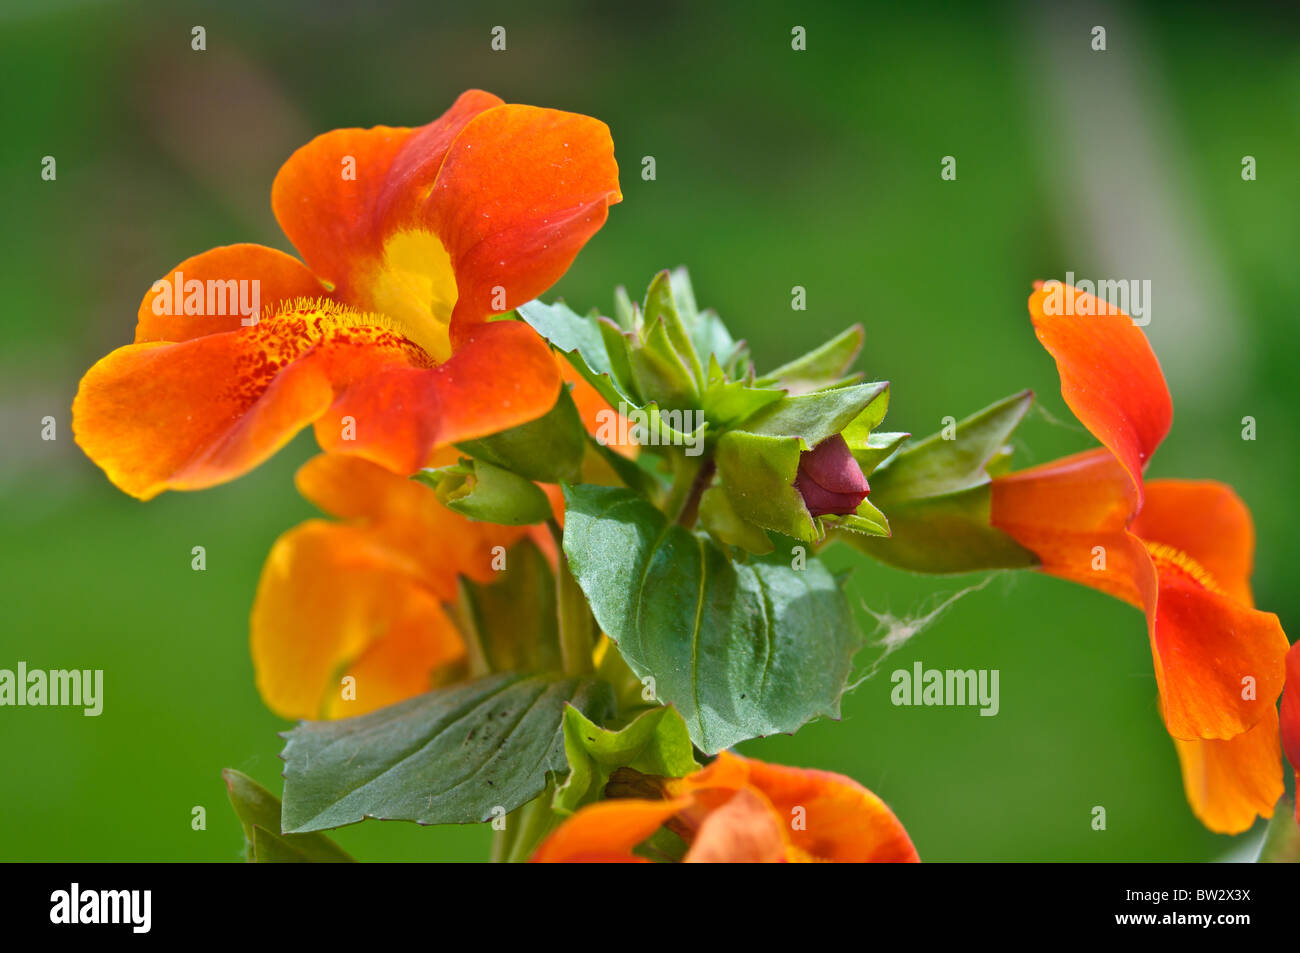 Bunch of orange monkey flowers with a bud Stock Photo